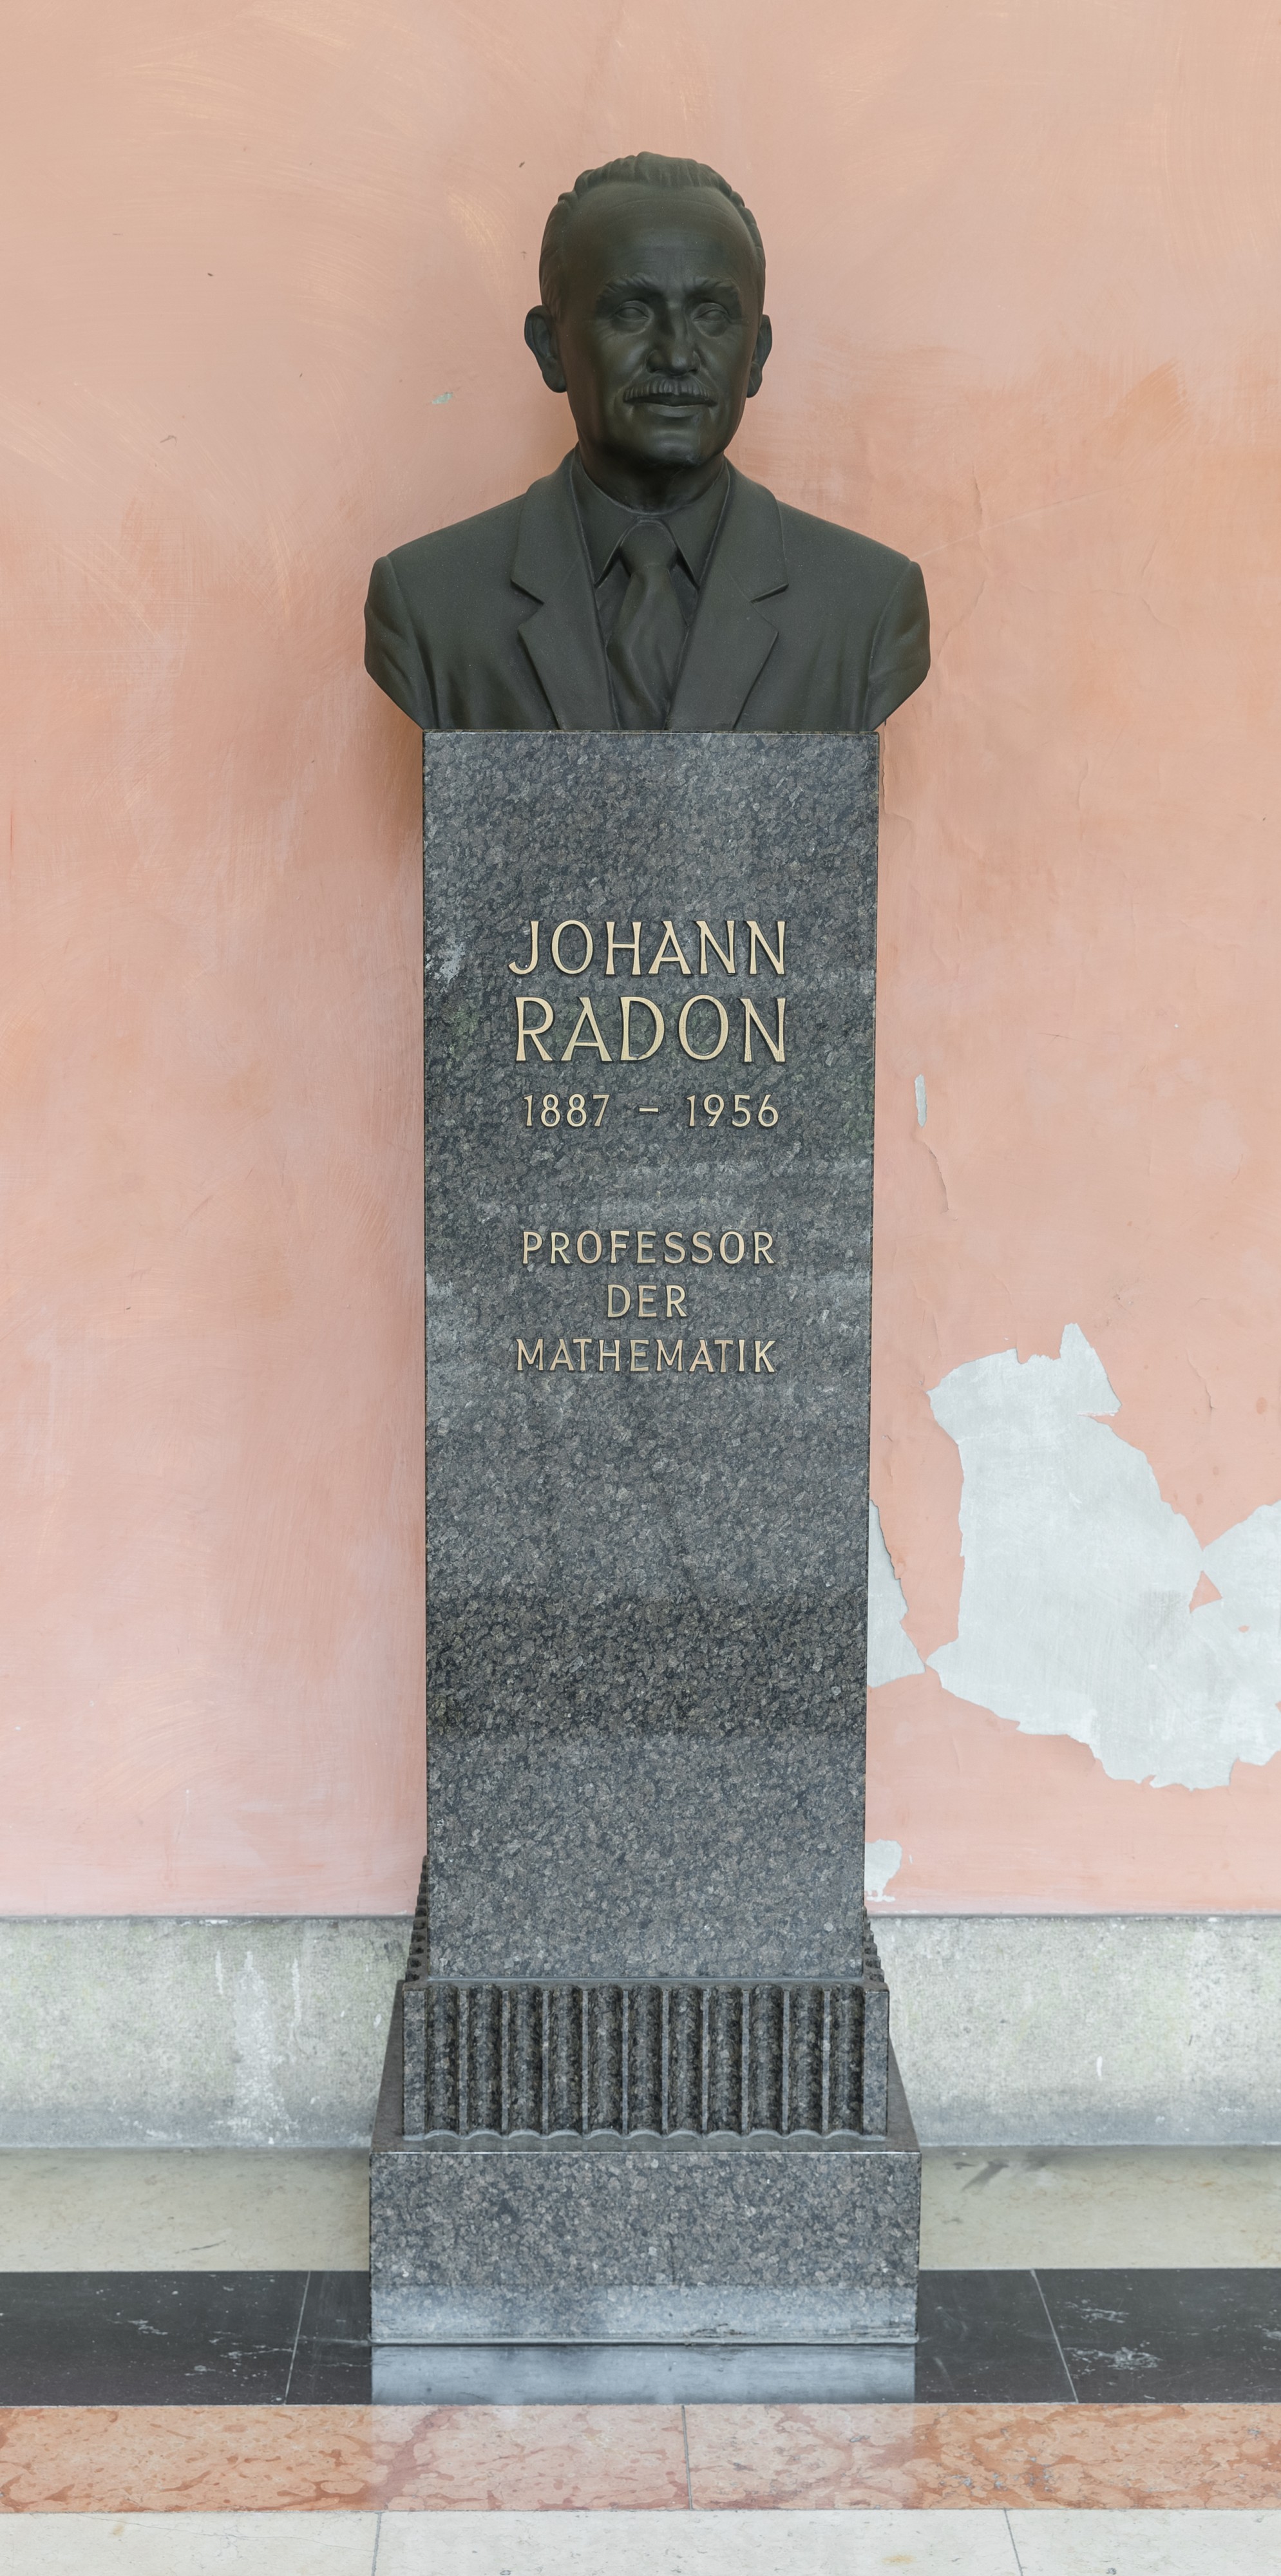 Johann Radon (1887-1956), Nr. 107, bust (bronze) in the Arkadenhof of the University of Vienna-2542-HDR